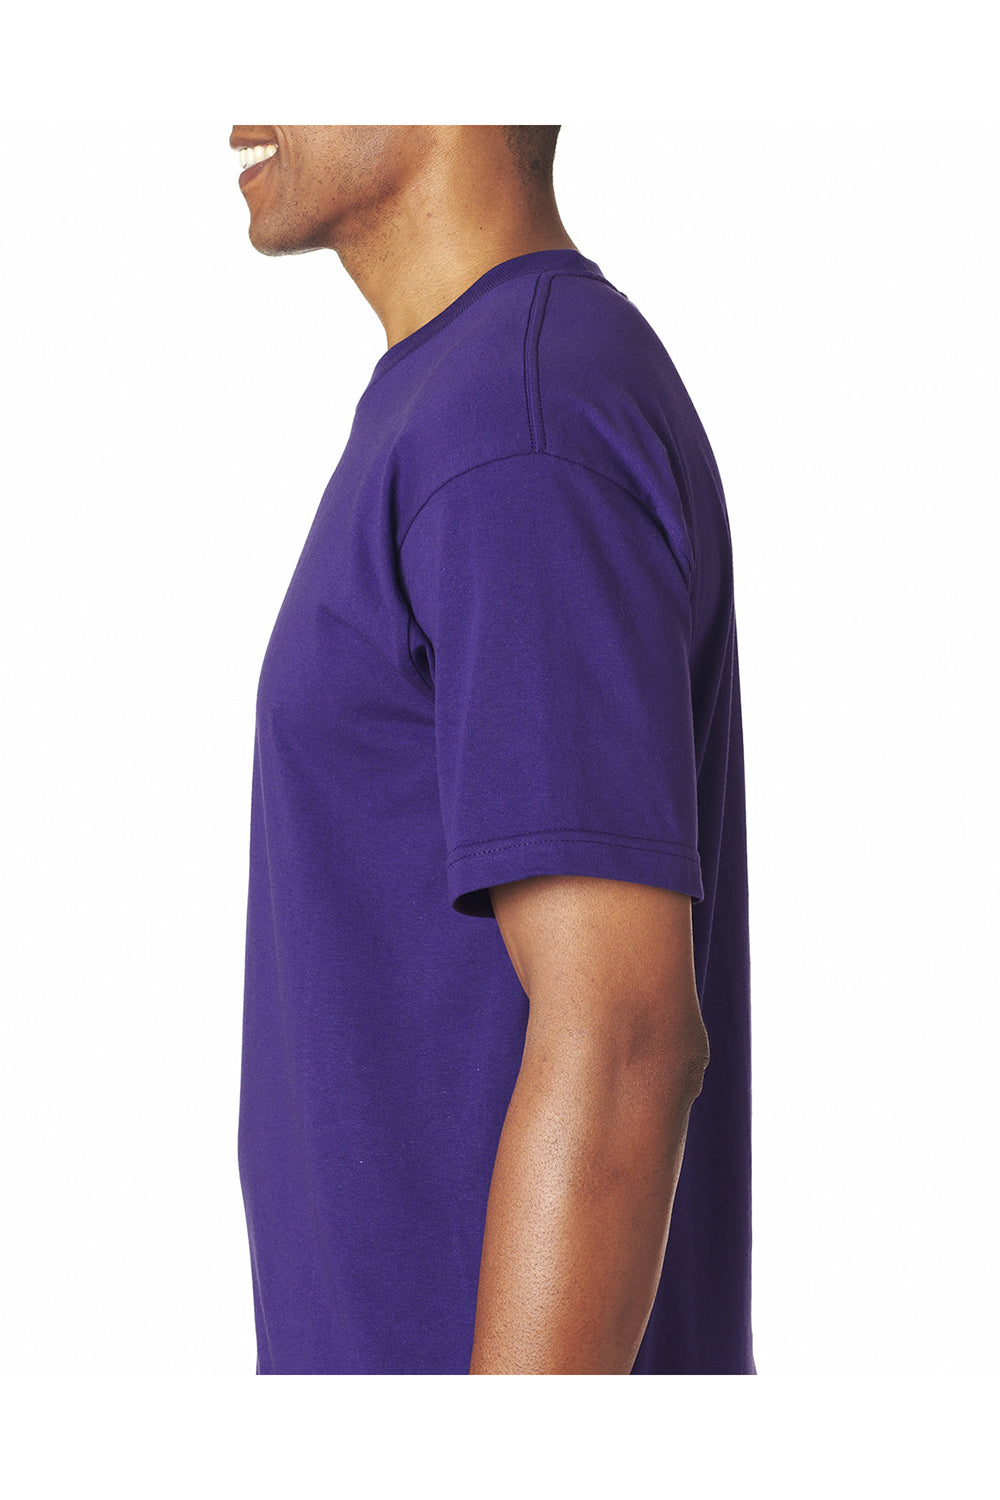 Bayside BA5100 Mens USA Made Short Sleeve Crewneck T-Shirt Purple Model Side